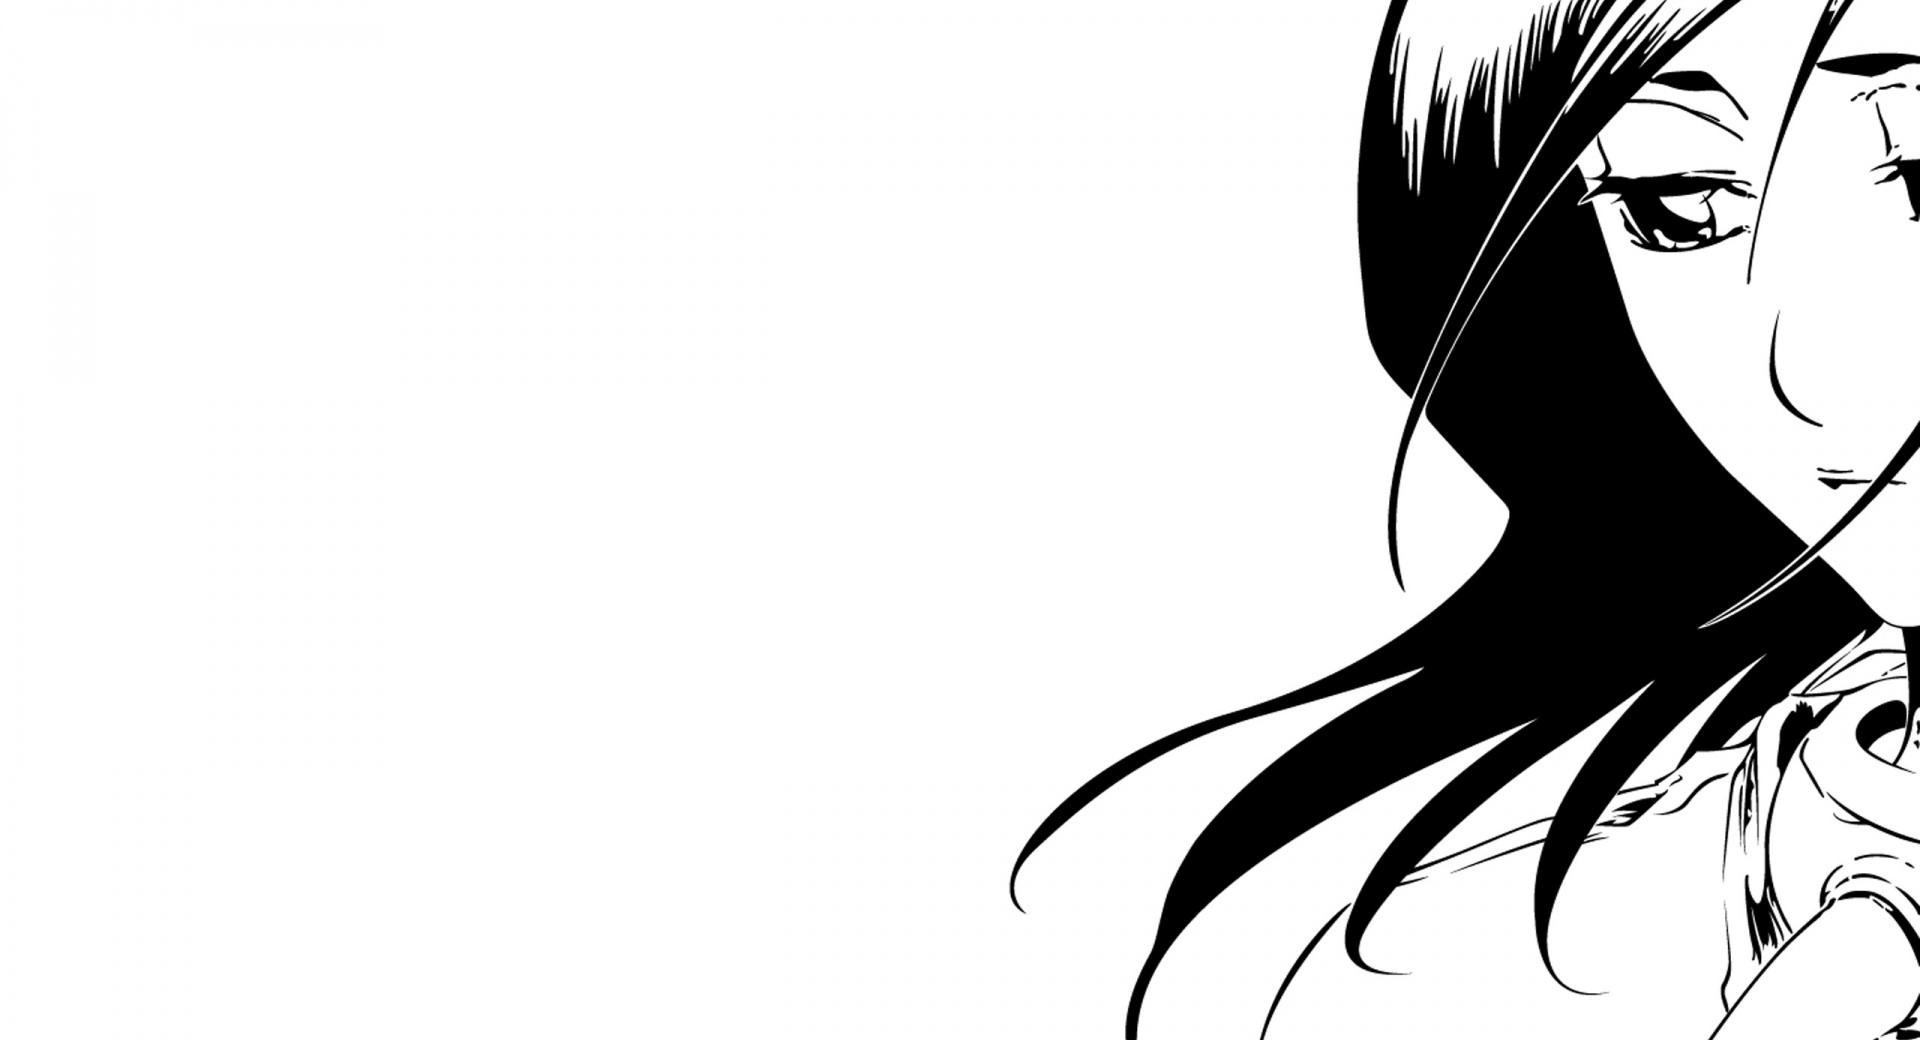 Melancholy Girl Manga at 1280 x 960 size wallpapers HD quality